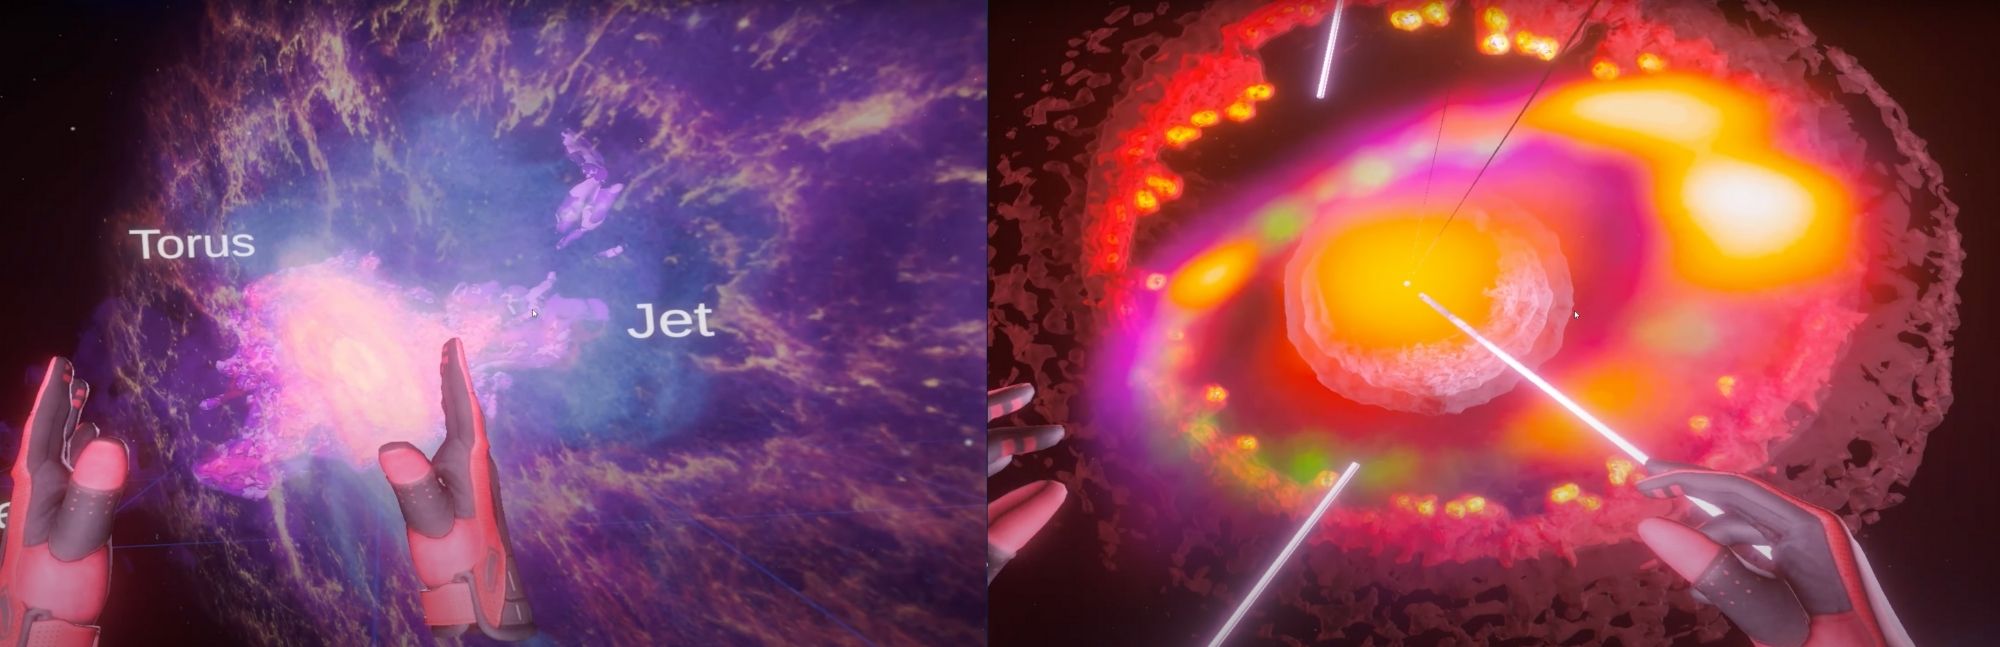 StarBlast: esplosioni stellari in realtà virtuale - MEDIA INAF